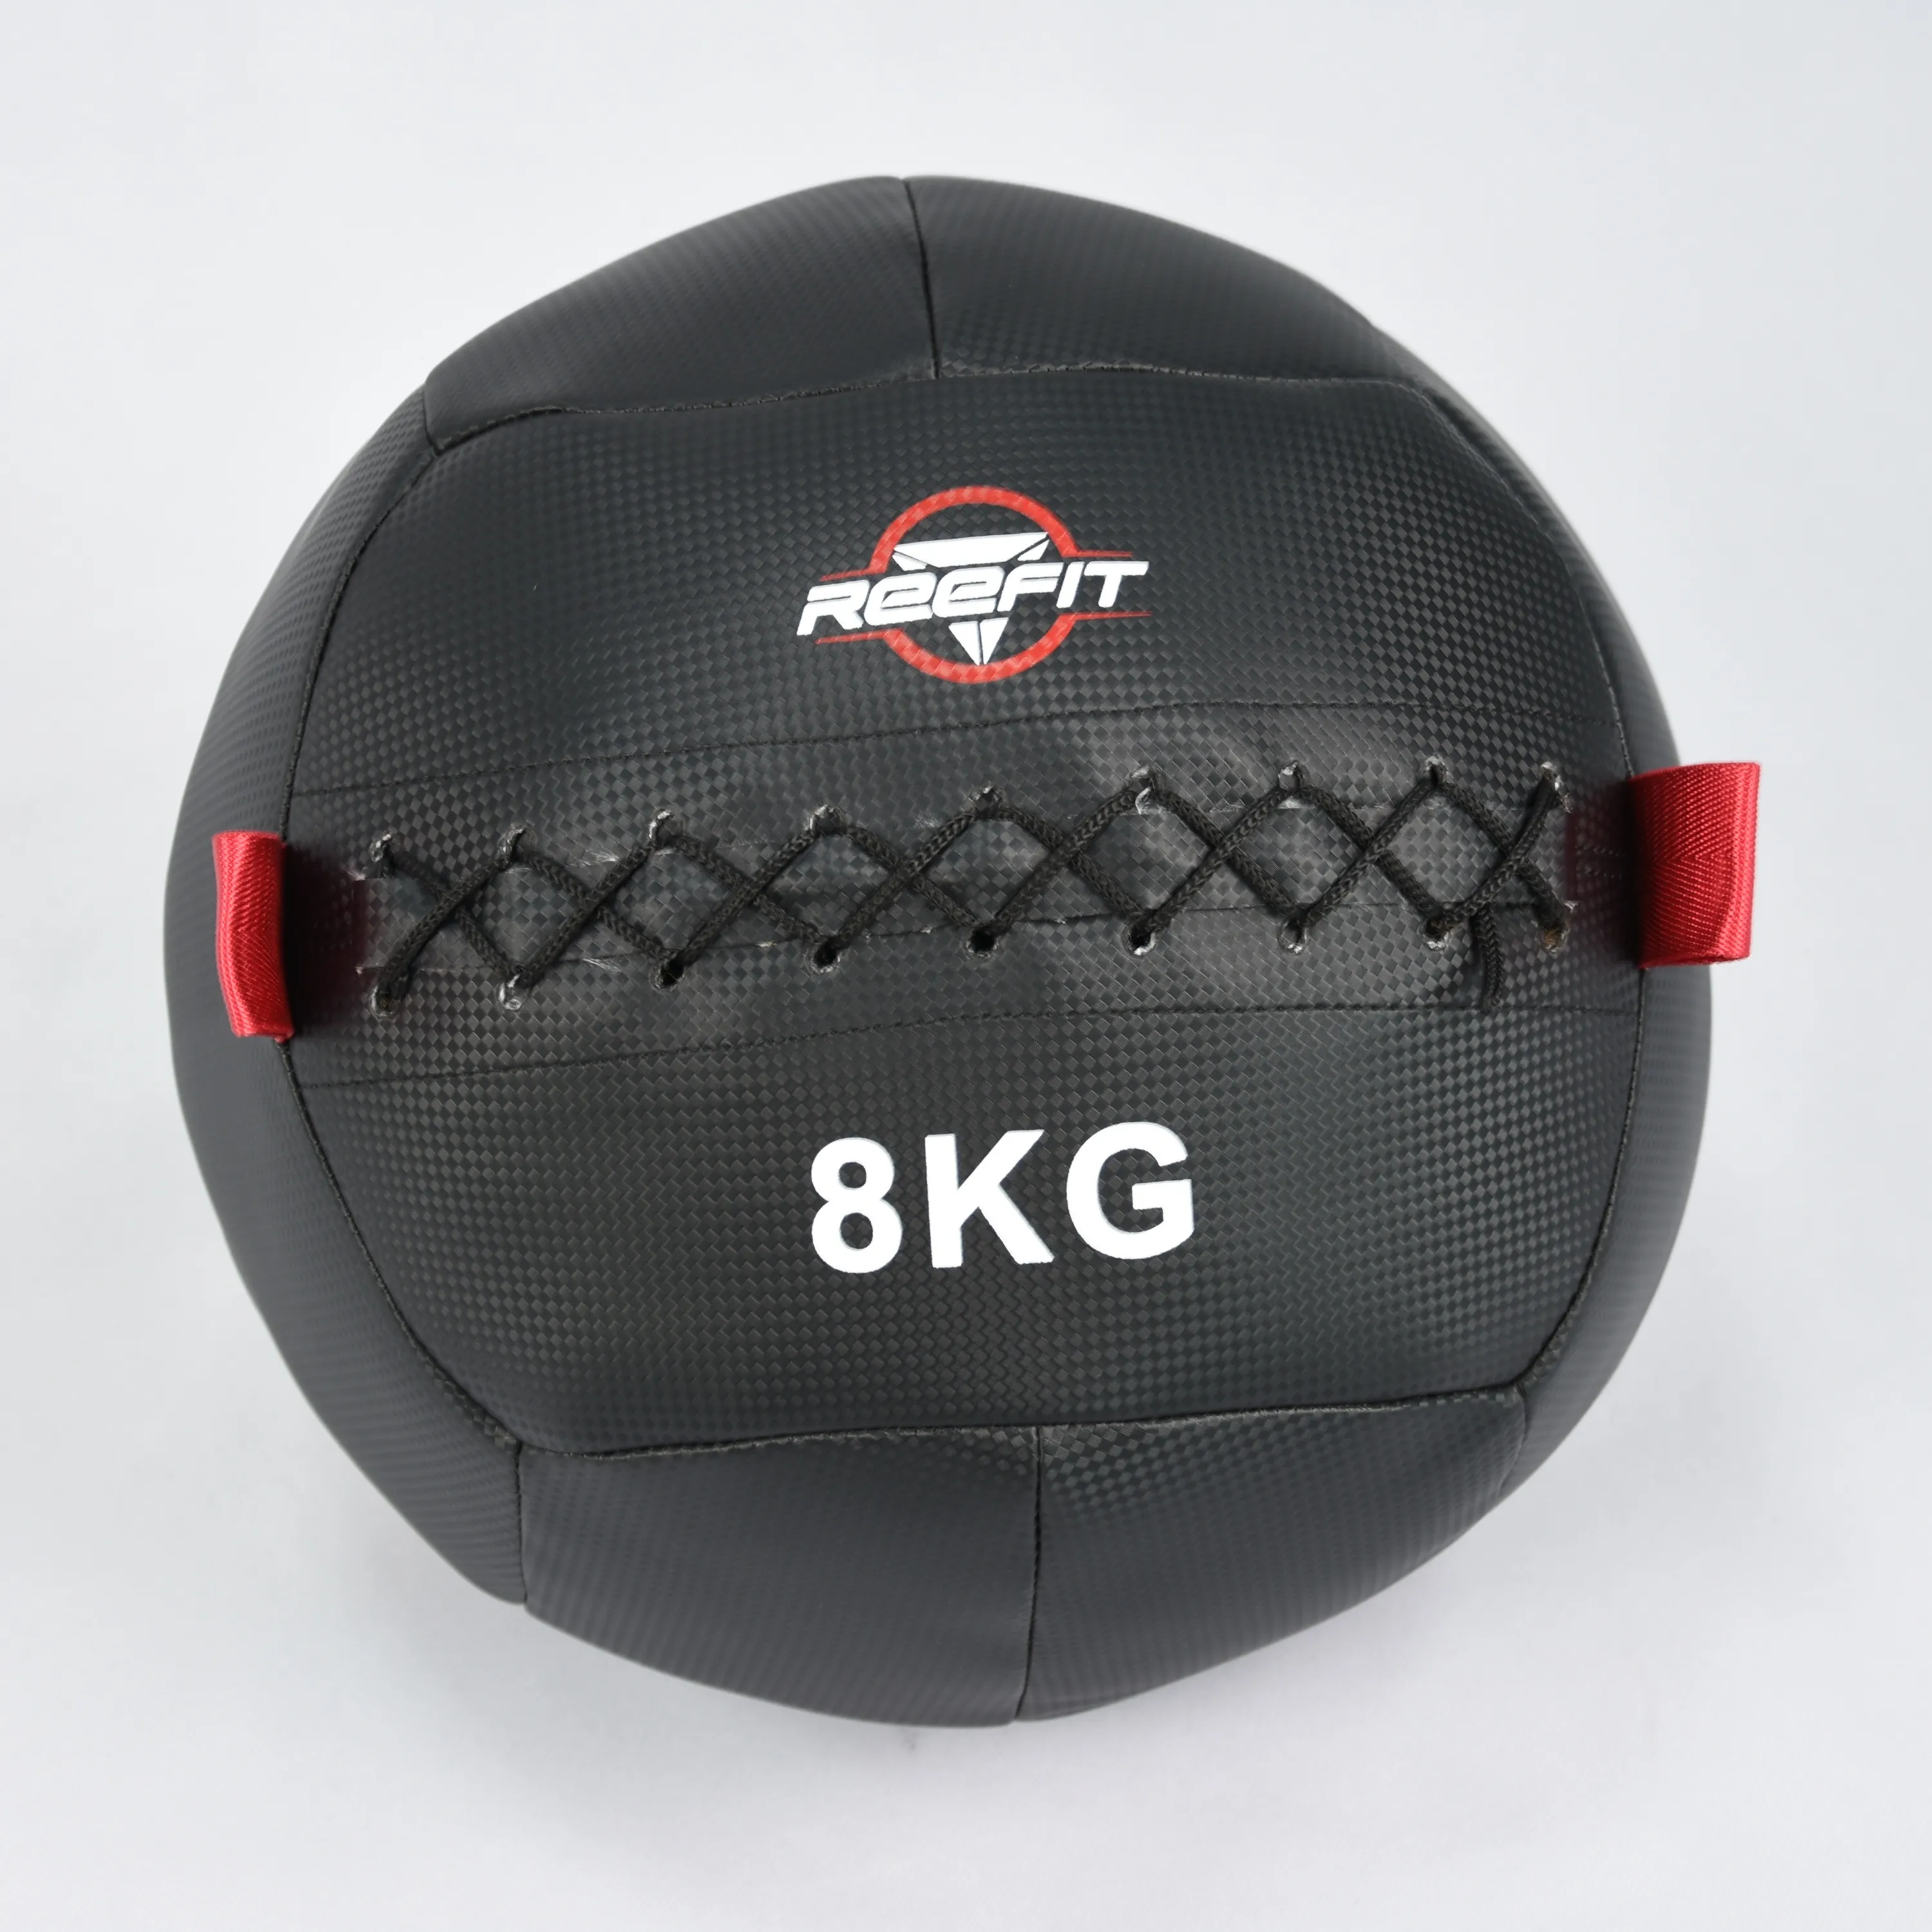 Power Training black wall ball for fitness medicine ball